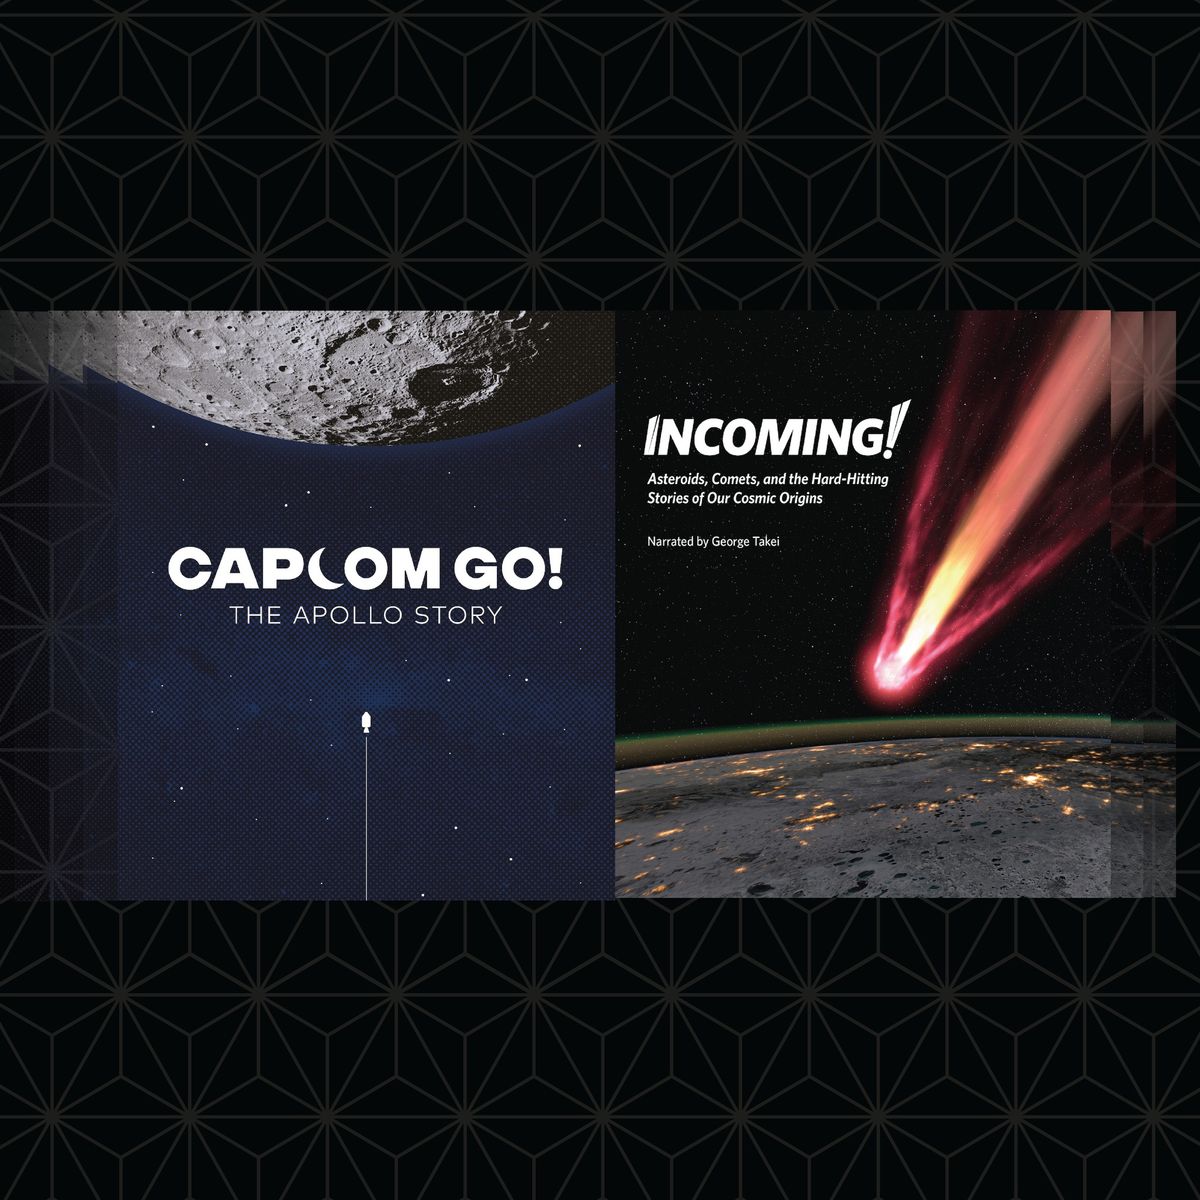 Double Feature: CAPCOM Go! & Incoming!